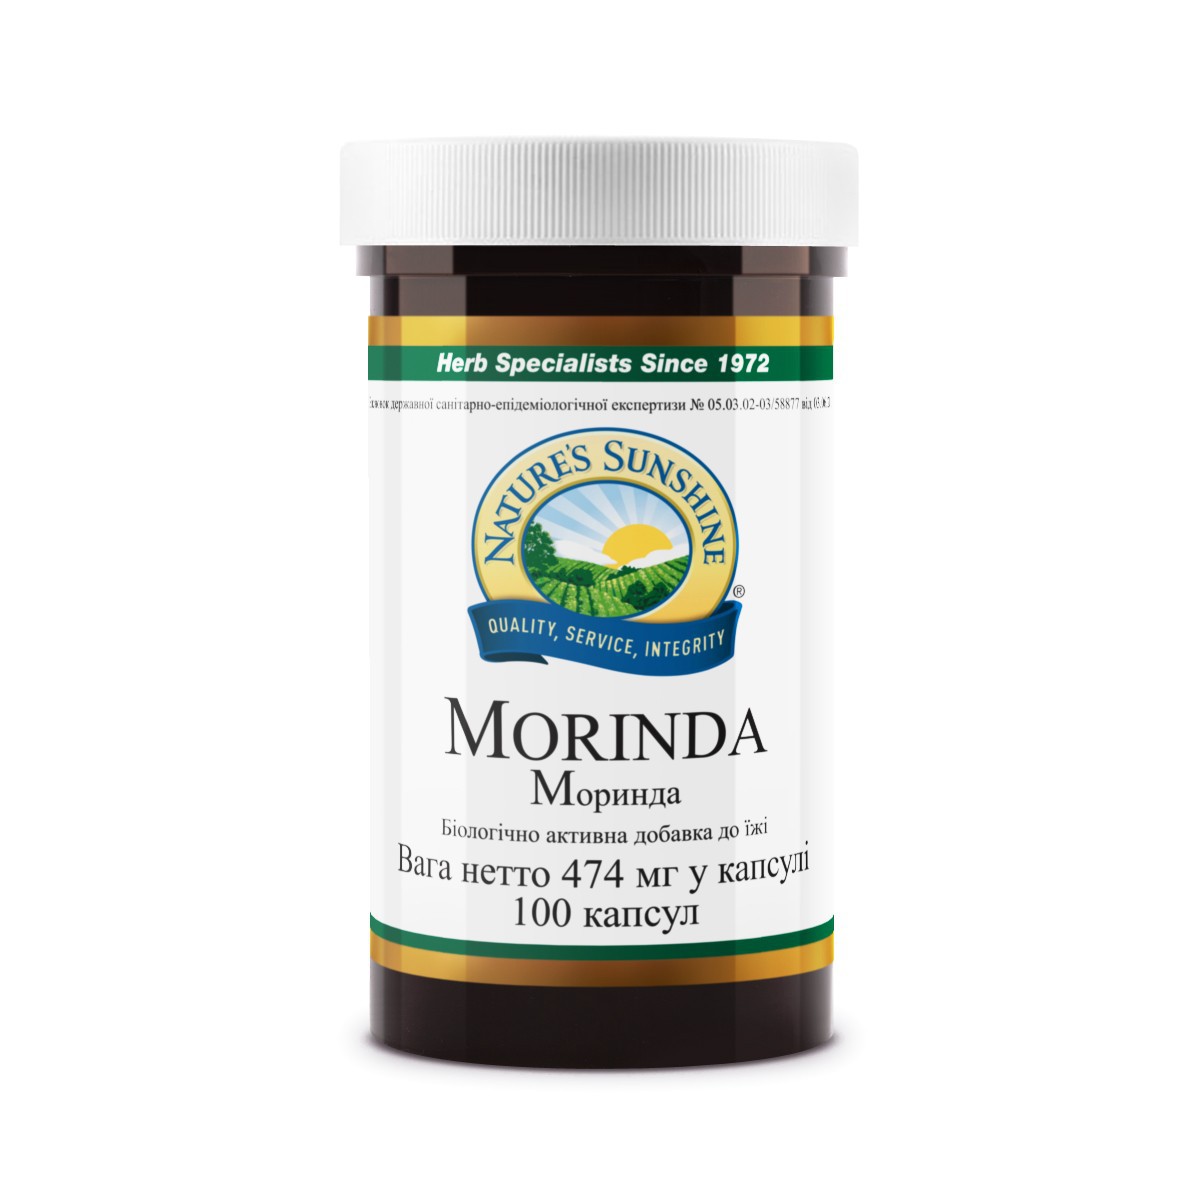 Morinda* - Моринда* - БАД Nature's Sunshine Products (NSP)